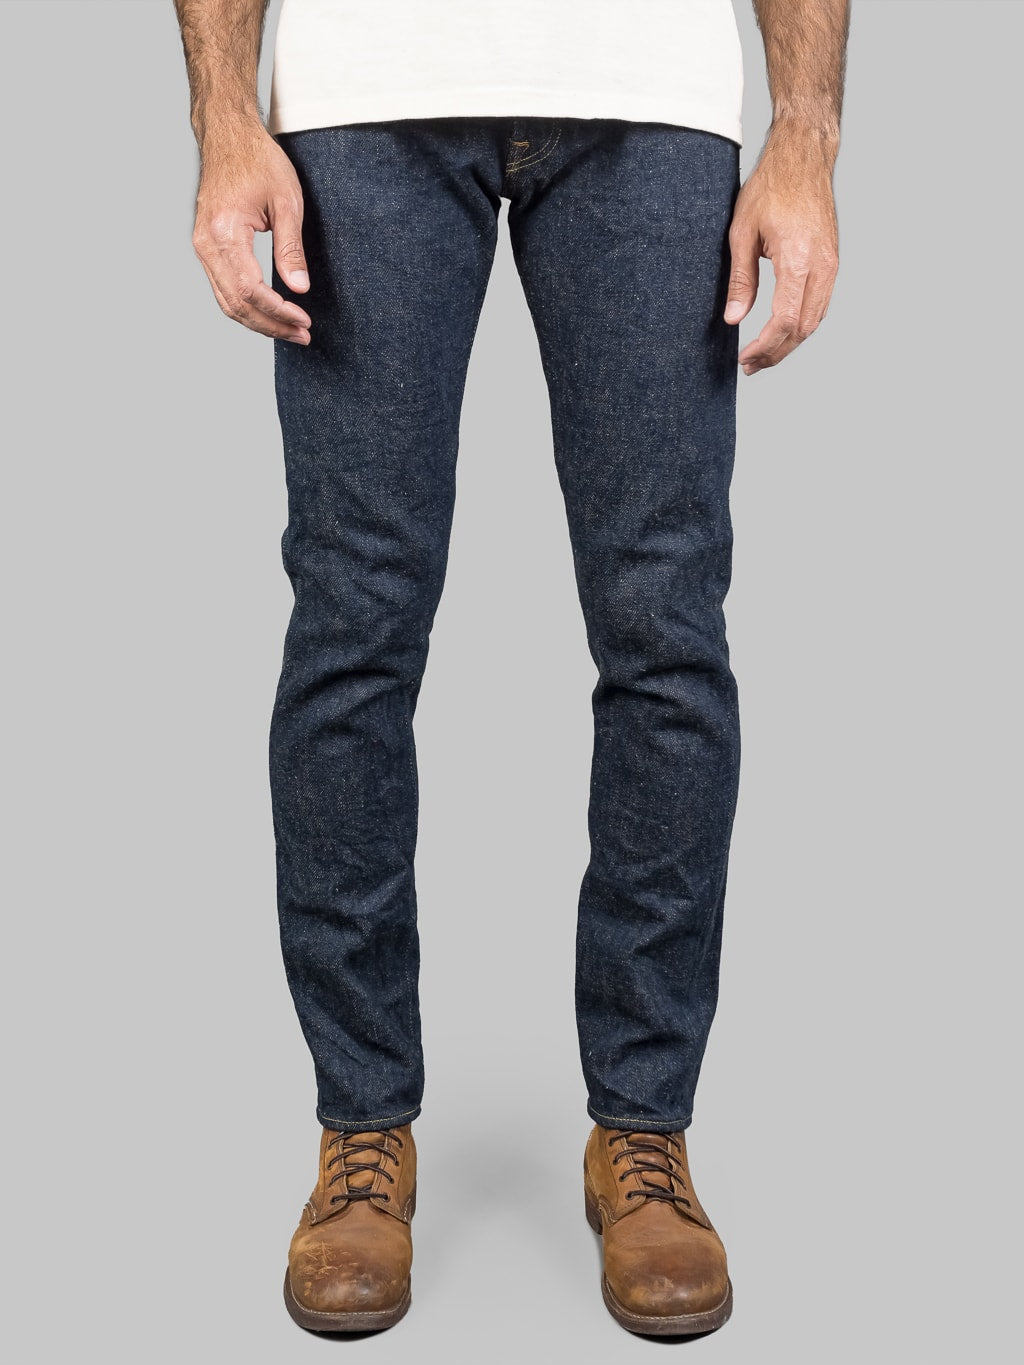 ONI Denim 544ZR Secret Denim Stylish Tapered Jeans front fit